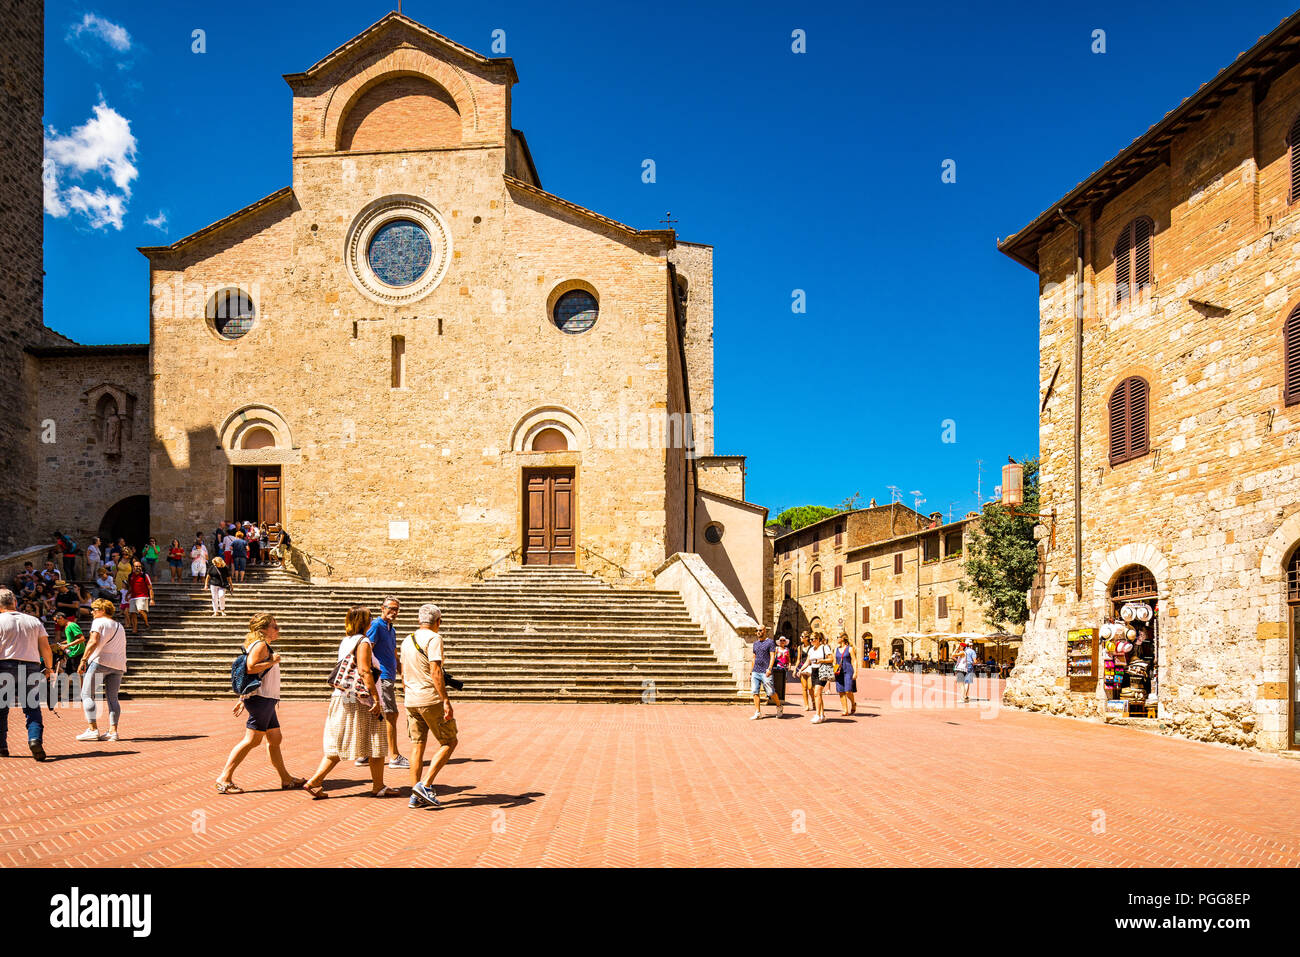 La iglesia románica de Santa Maria Assunta, o Duomo di San Gimignano y frente a la Piazza del Duomo en San Gimignano, Italia Foto de stock